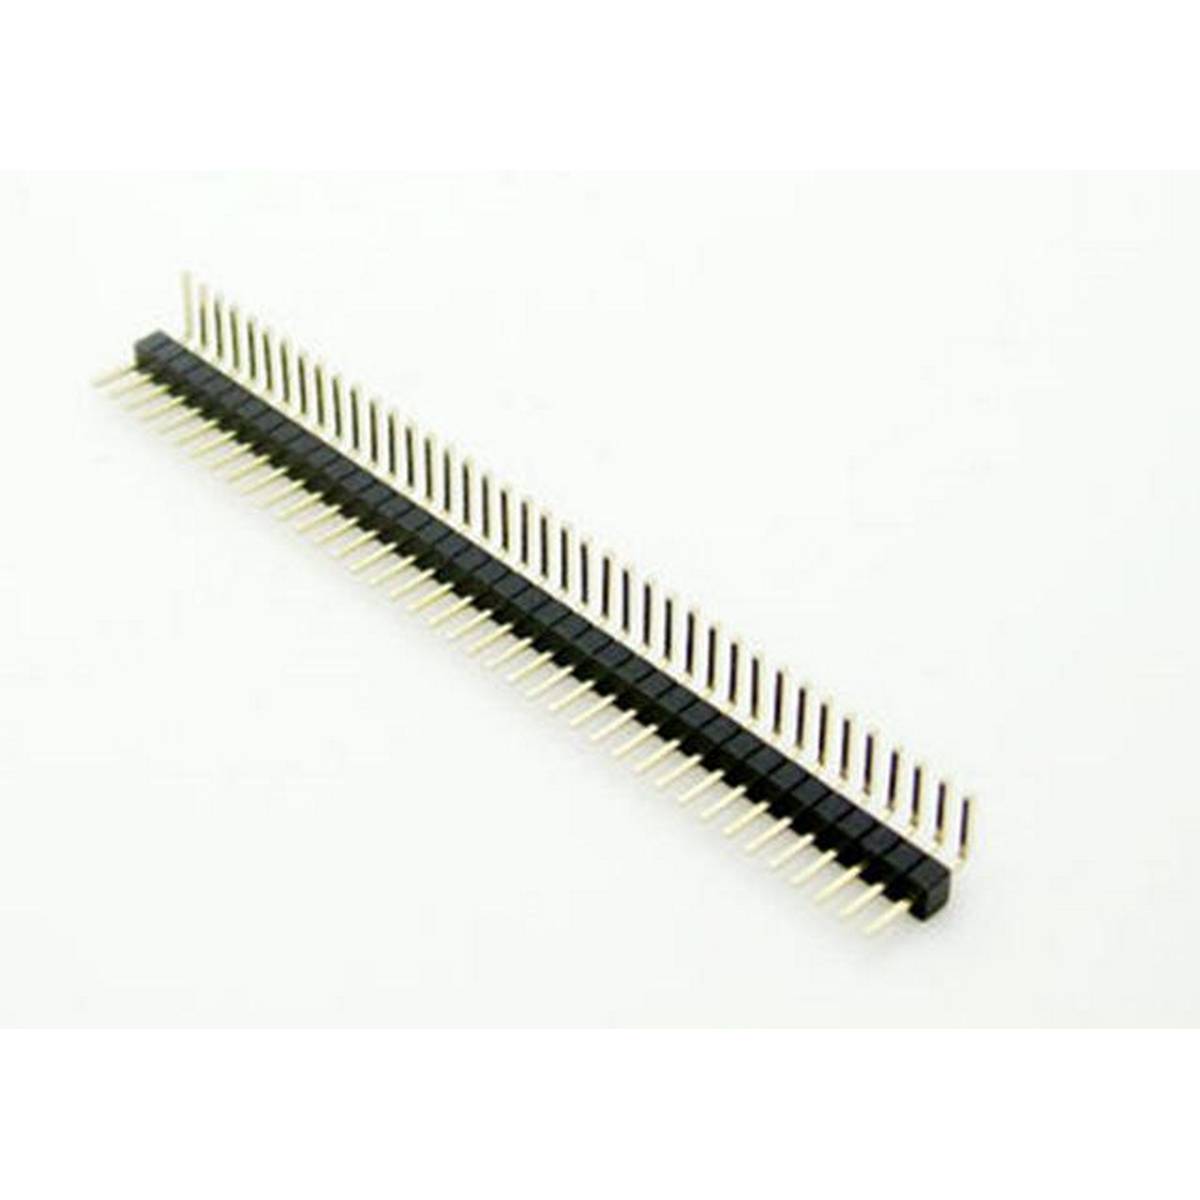 4 Pcs 40 Pin Single Row Right Angle Rectangular Male Header Pin Strip Connector